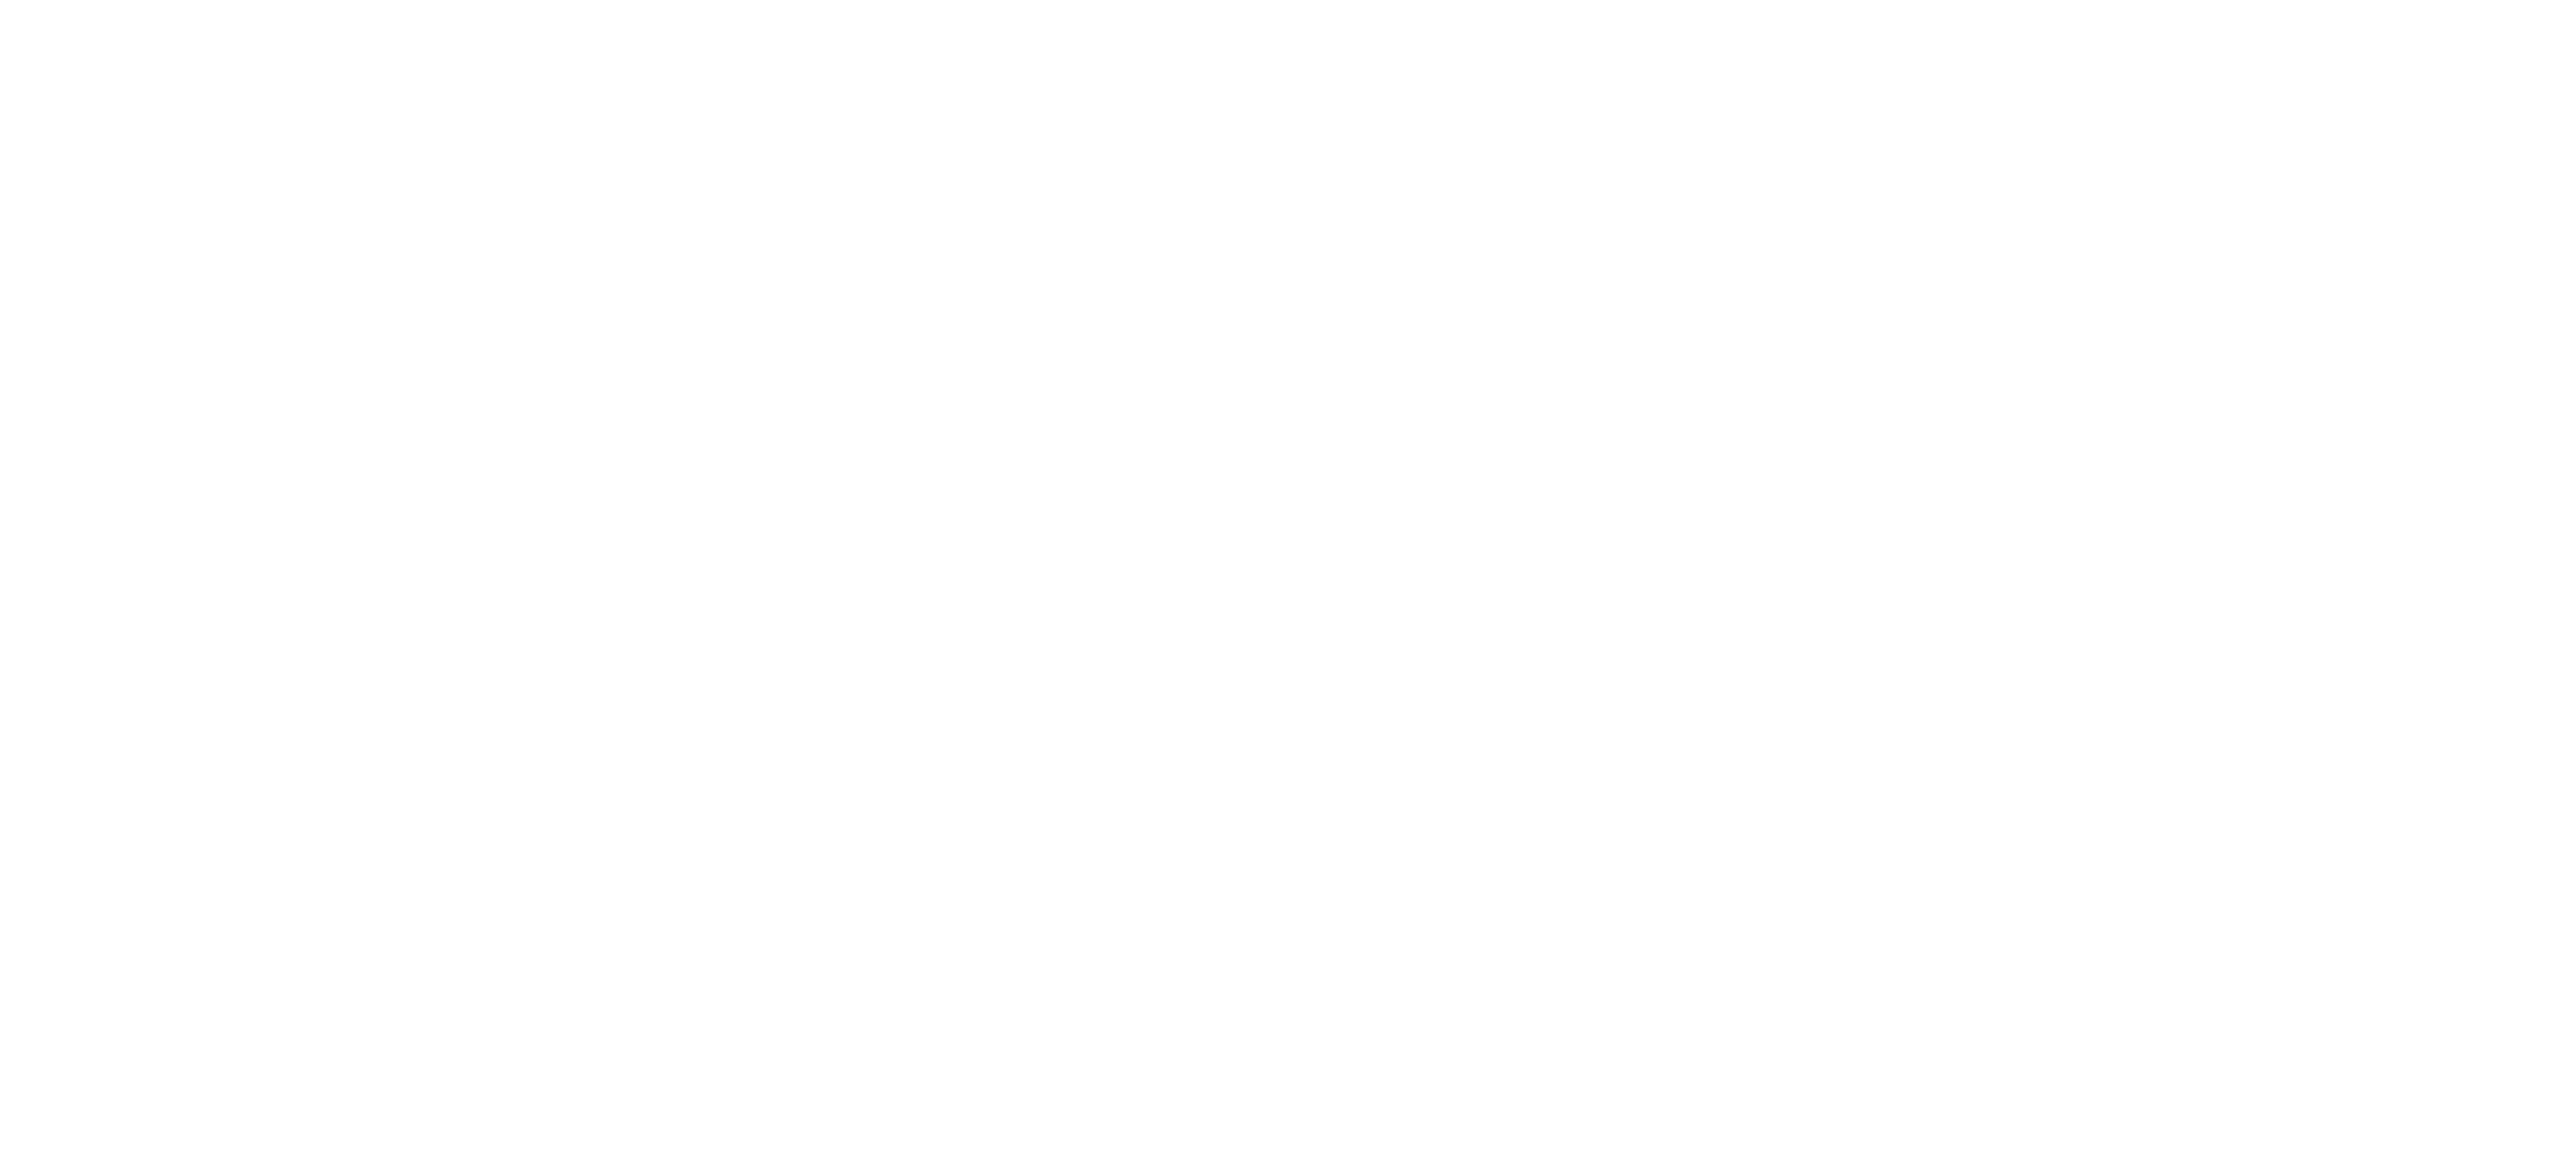 Mountain Men logo